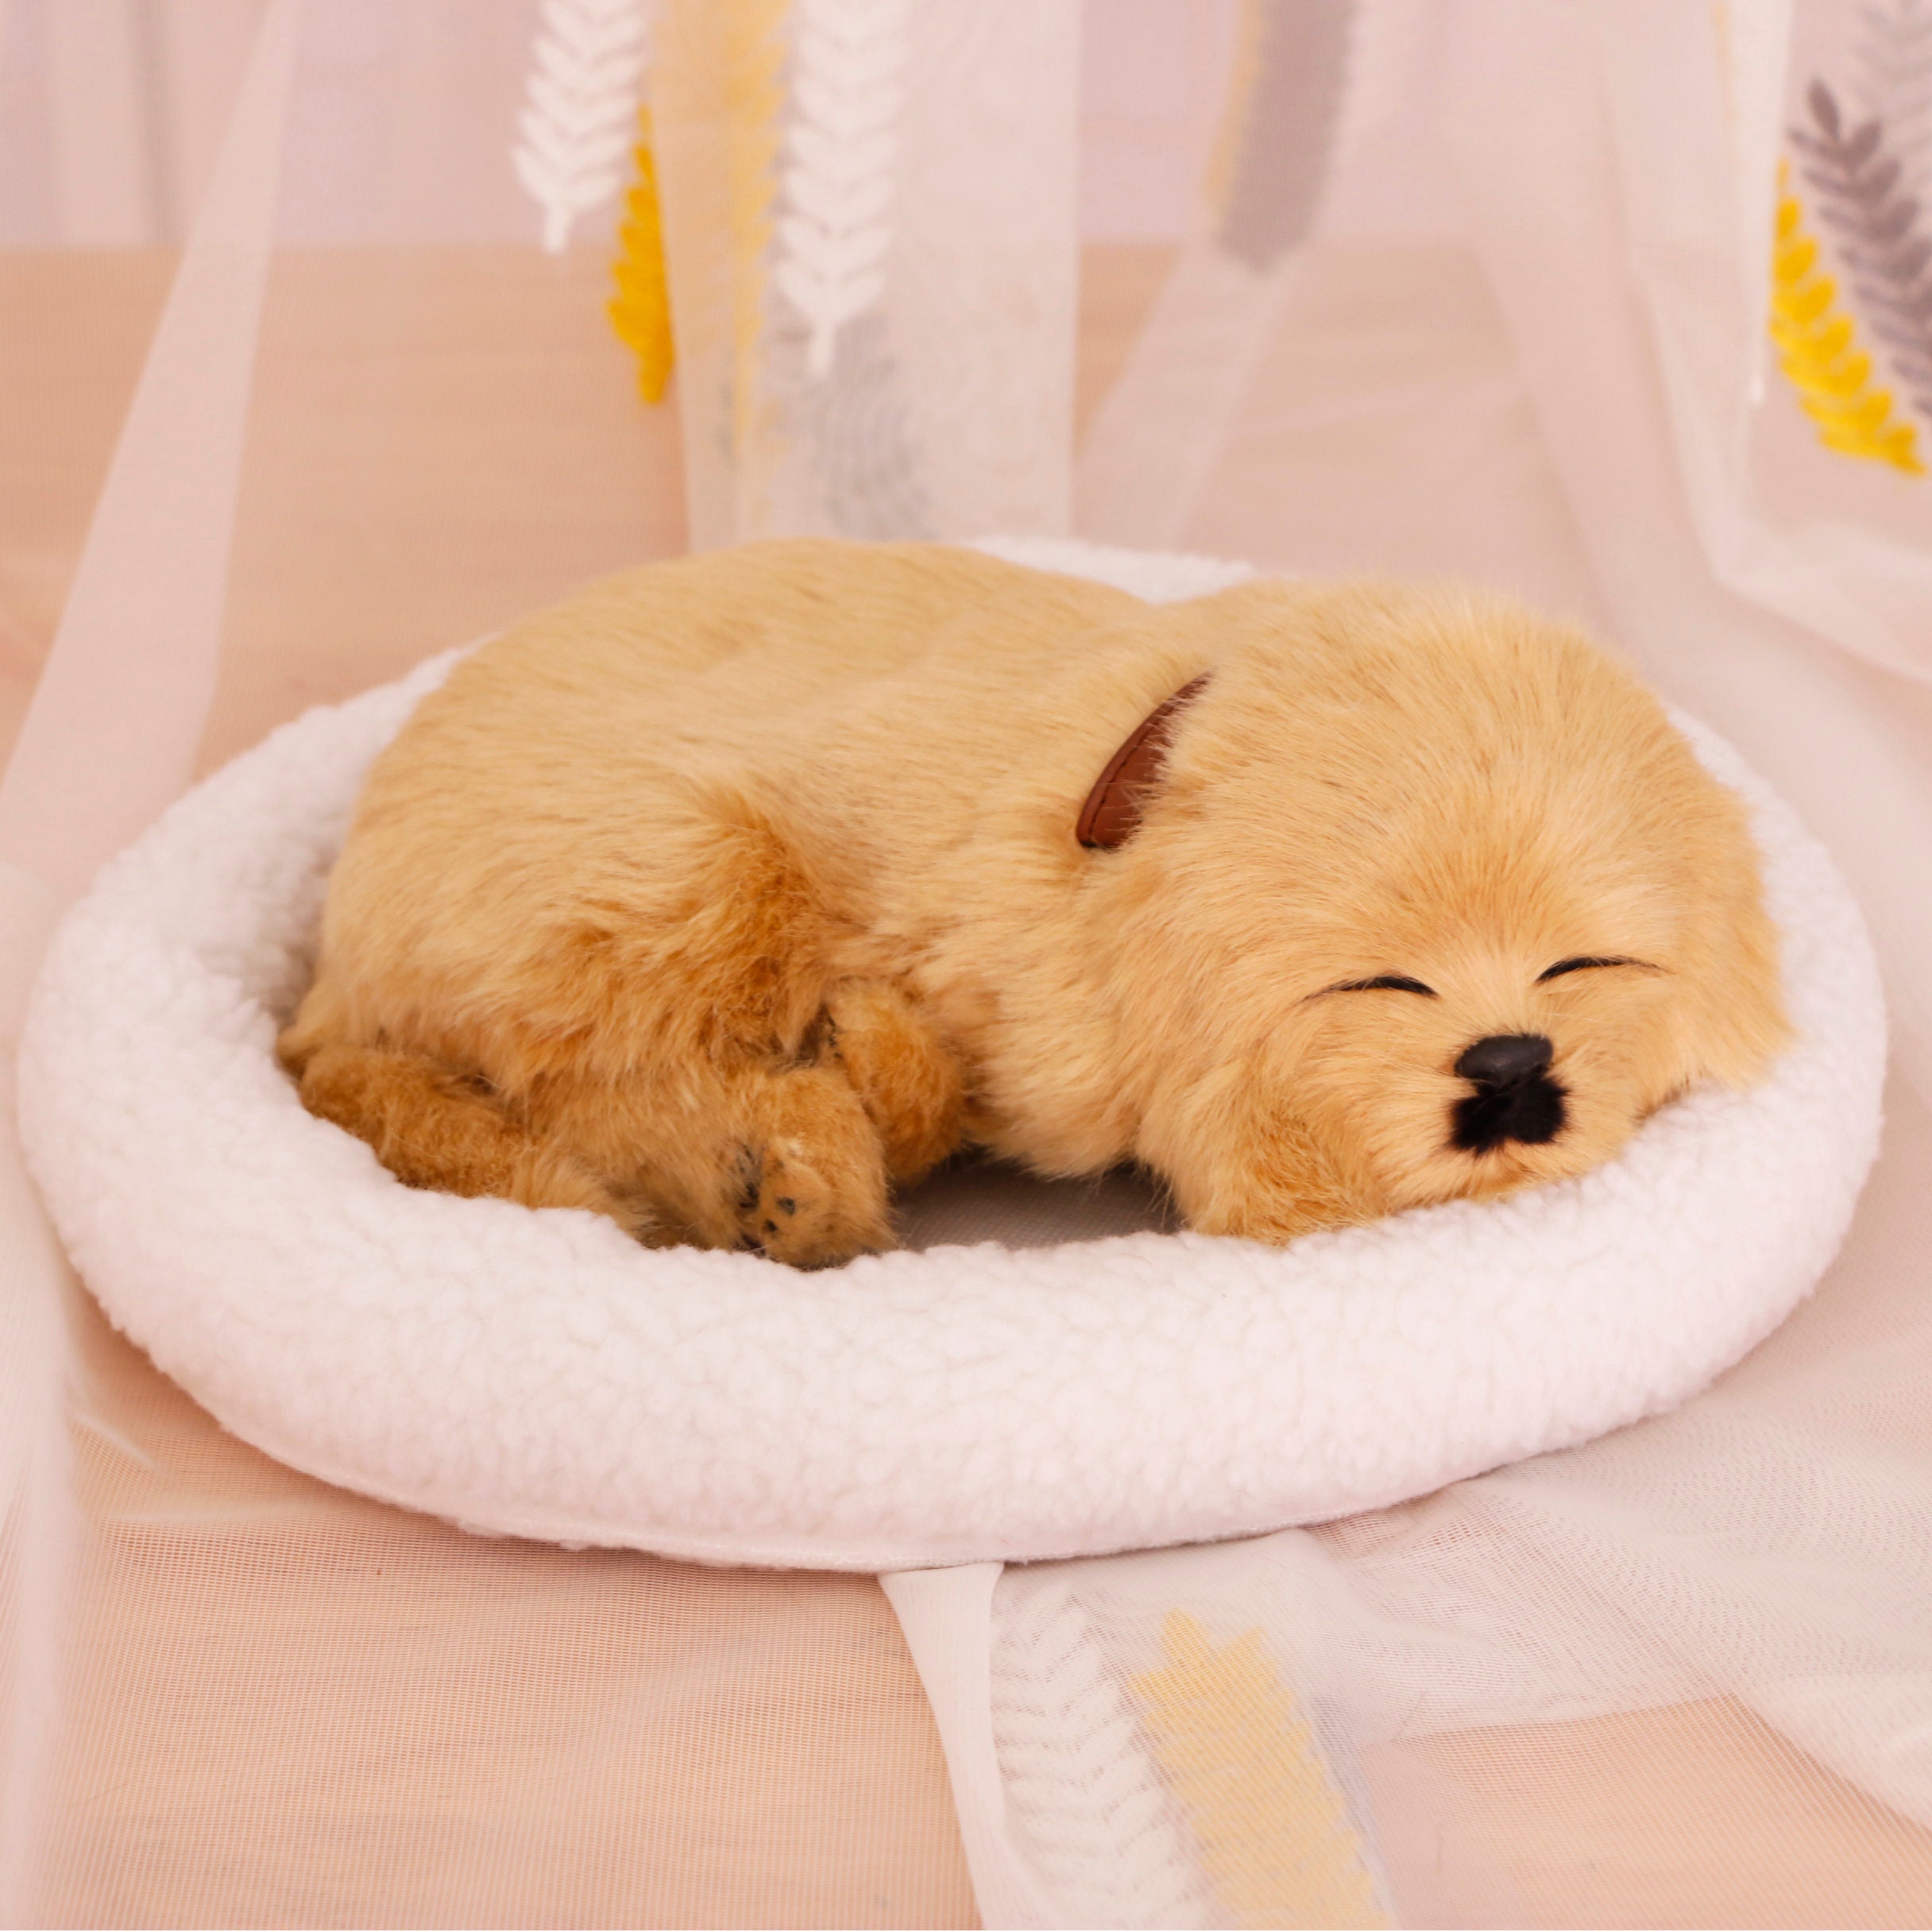 Breathing/Sleeping Stuffed Kitten Puppy Soft Toys Plush Toy Kids Gift Home Decor 